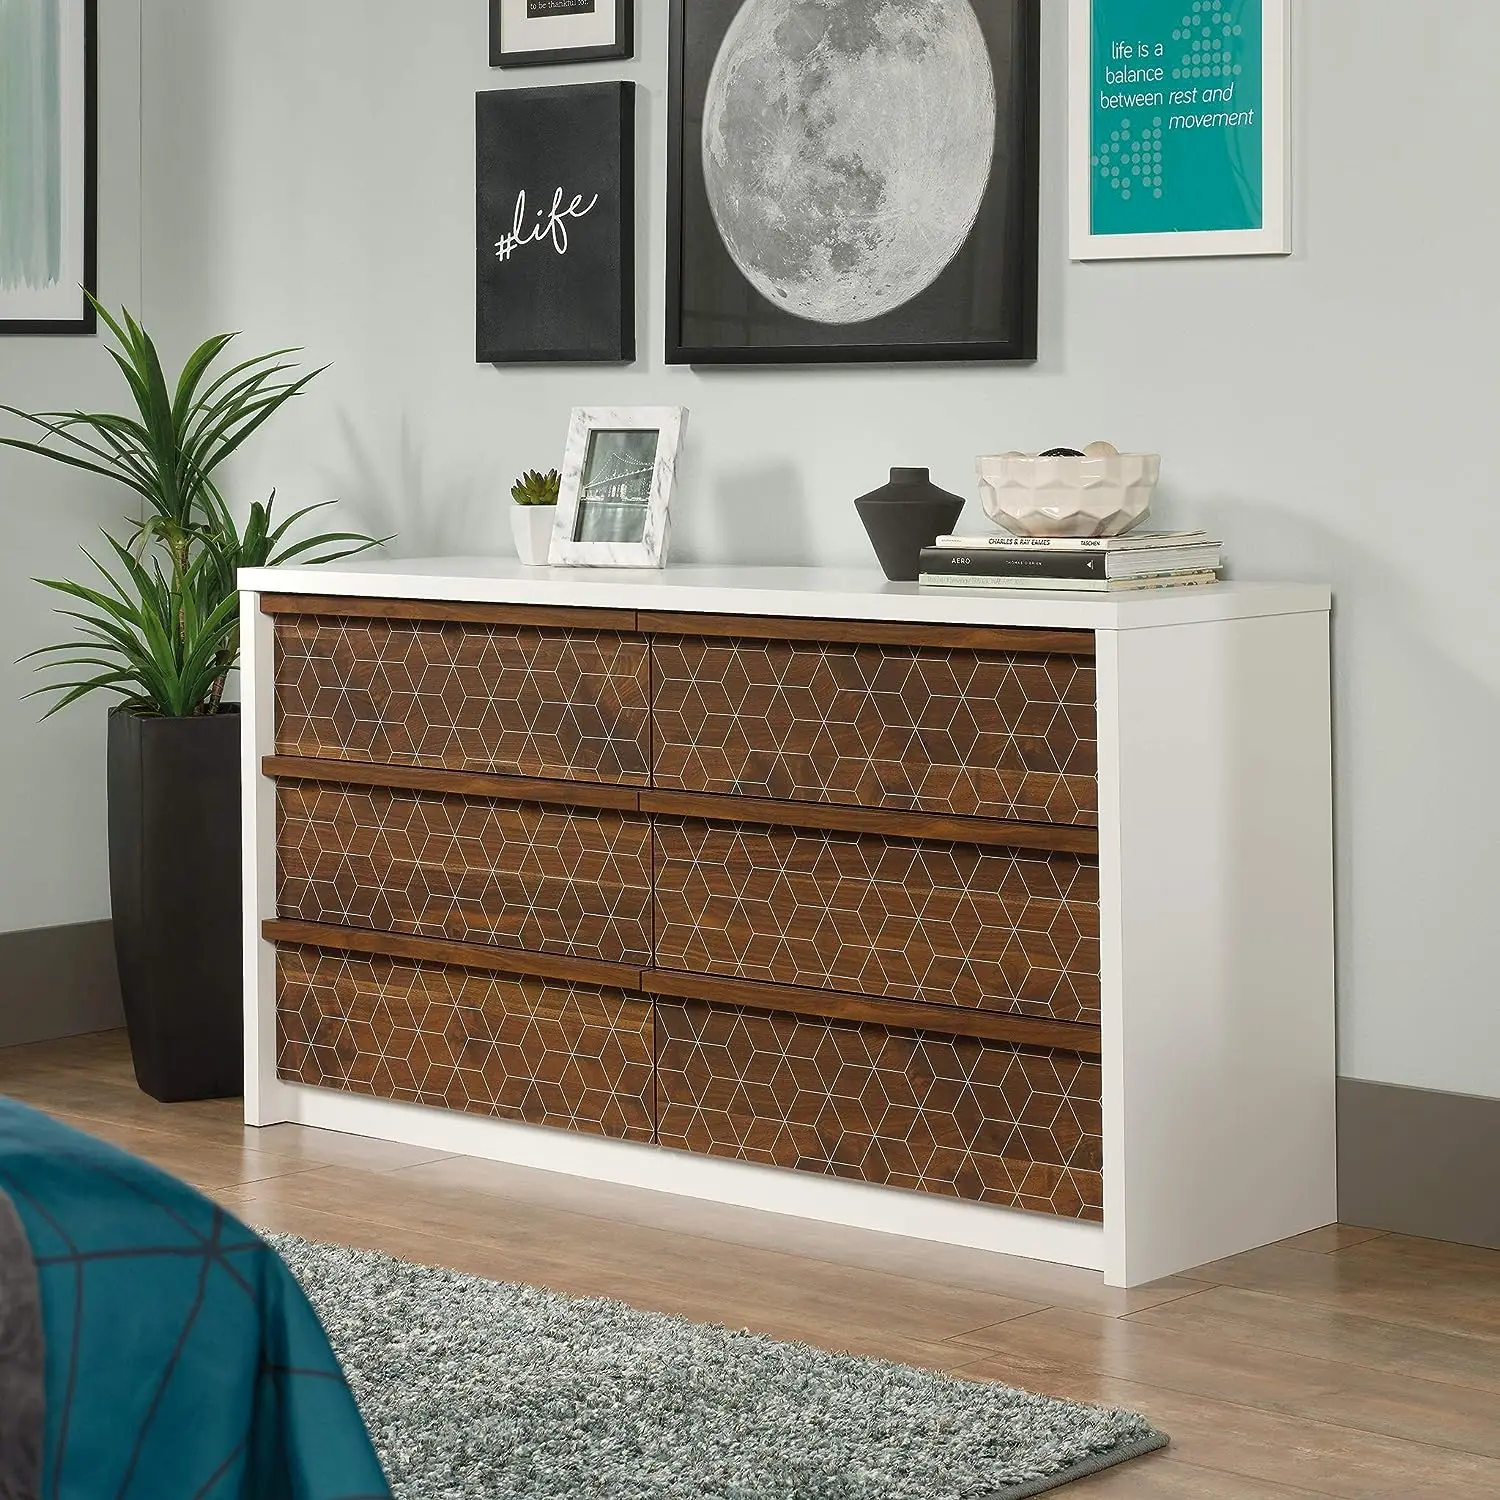 

Park Dresser, L 60.71" x W 17.48" x H 31.06", Soft White finish Wood dresser drawer dresser Dressers for bedroom drawer for